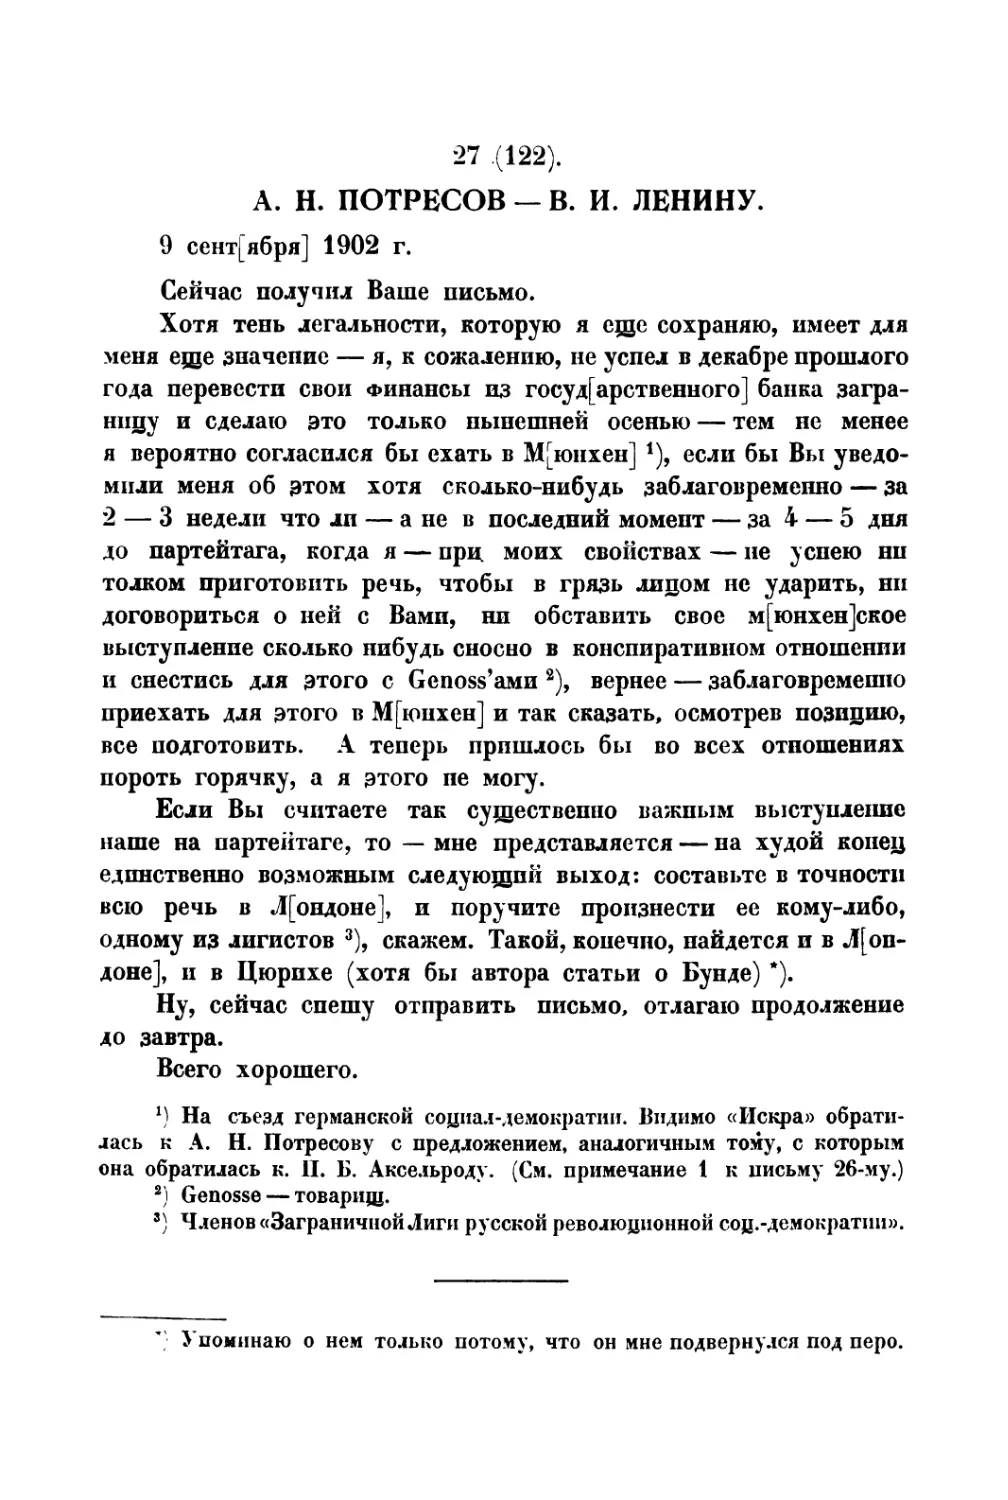 27. А. Н. Потресов — В. И. Ленину от 9 IX 1902 г